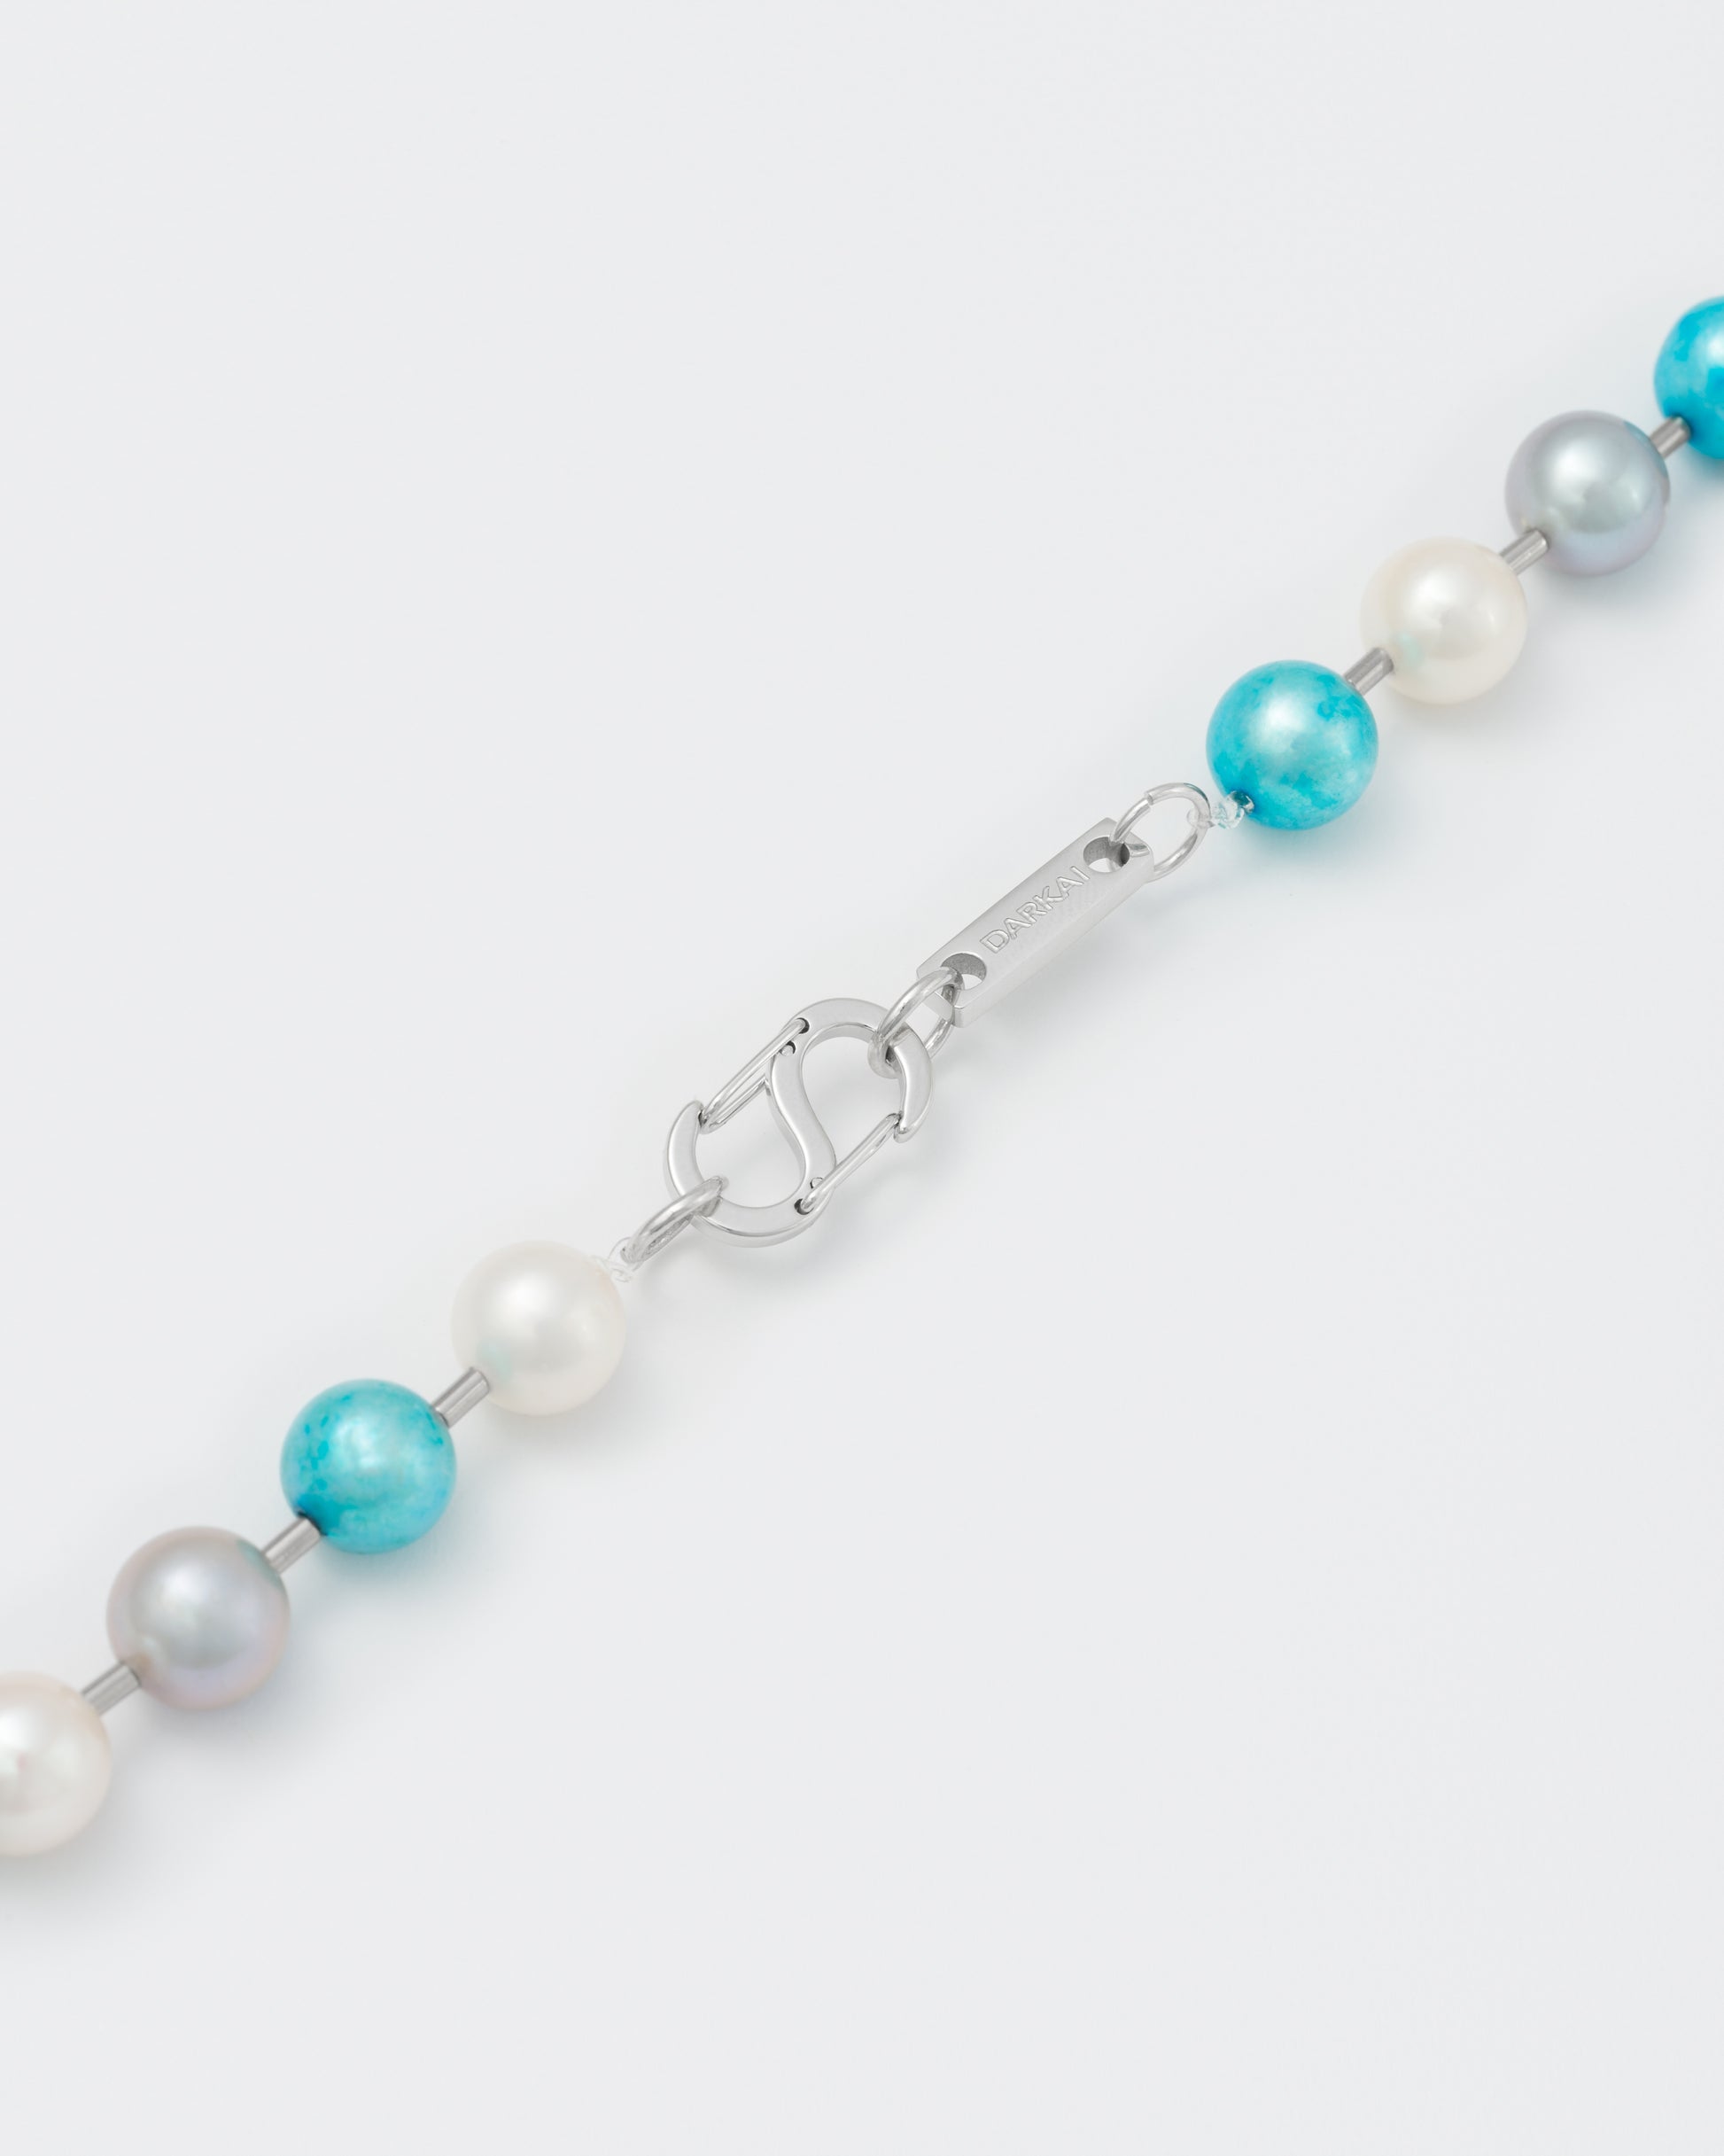 DARKAI avalanche pearl necklace detail